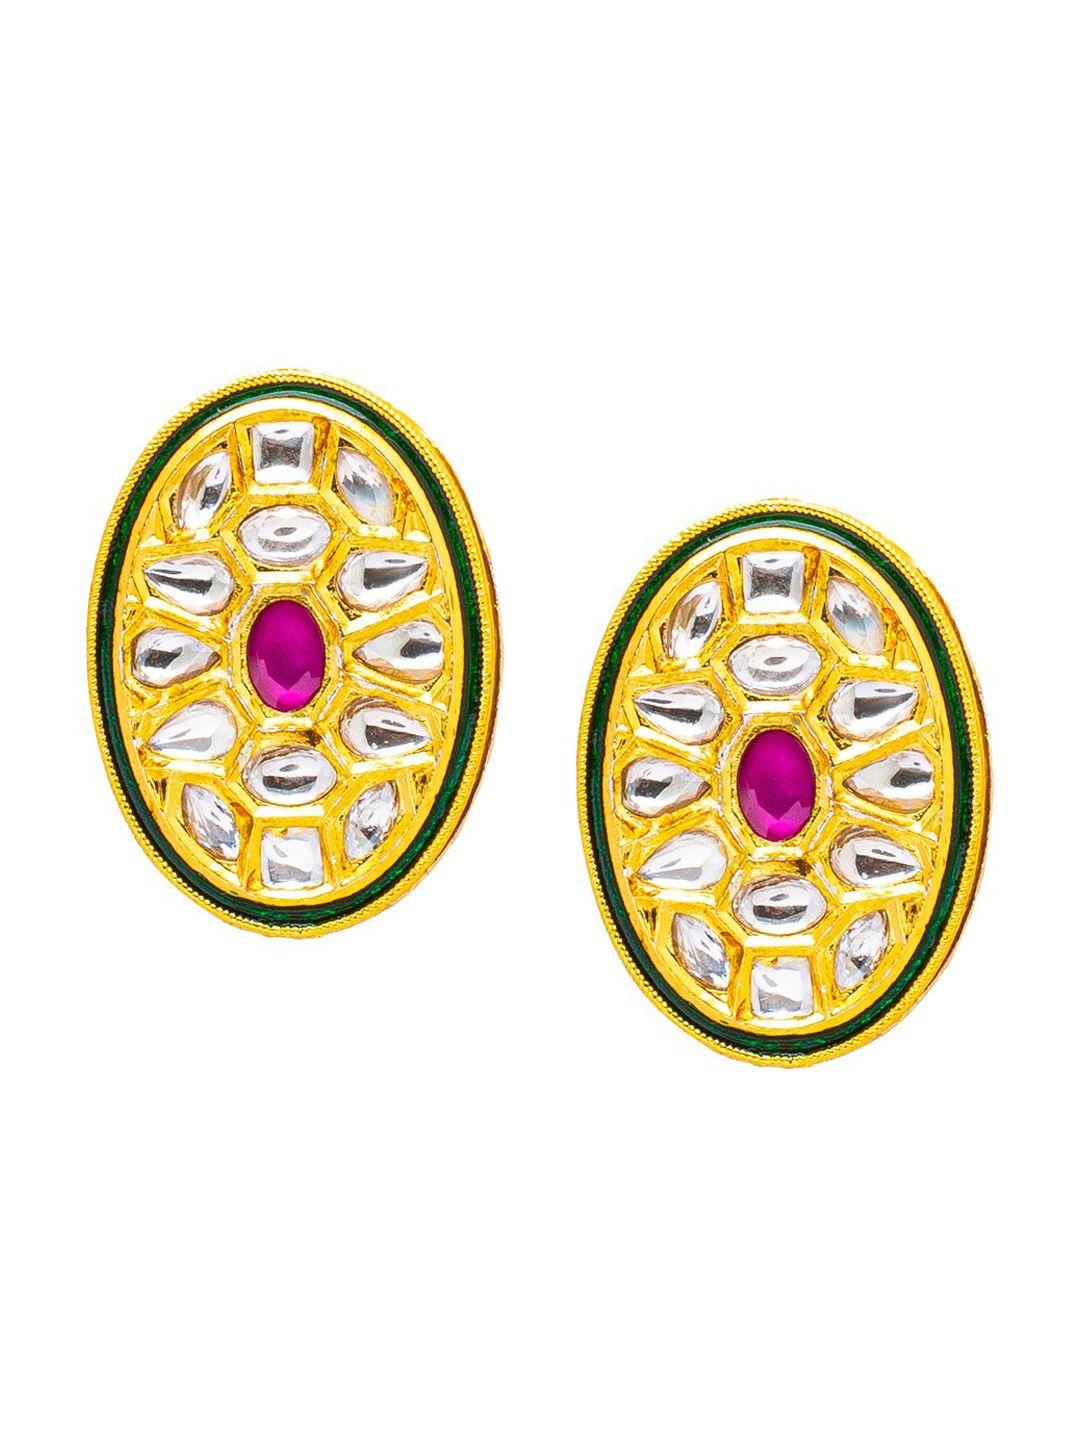 shining jewel - by shivansh gold-plated oval studs earrings